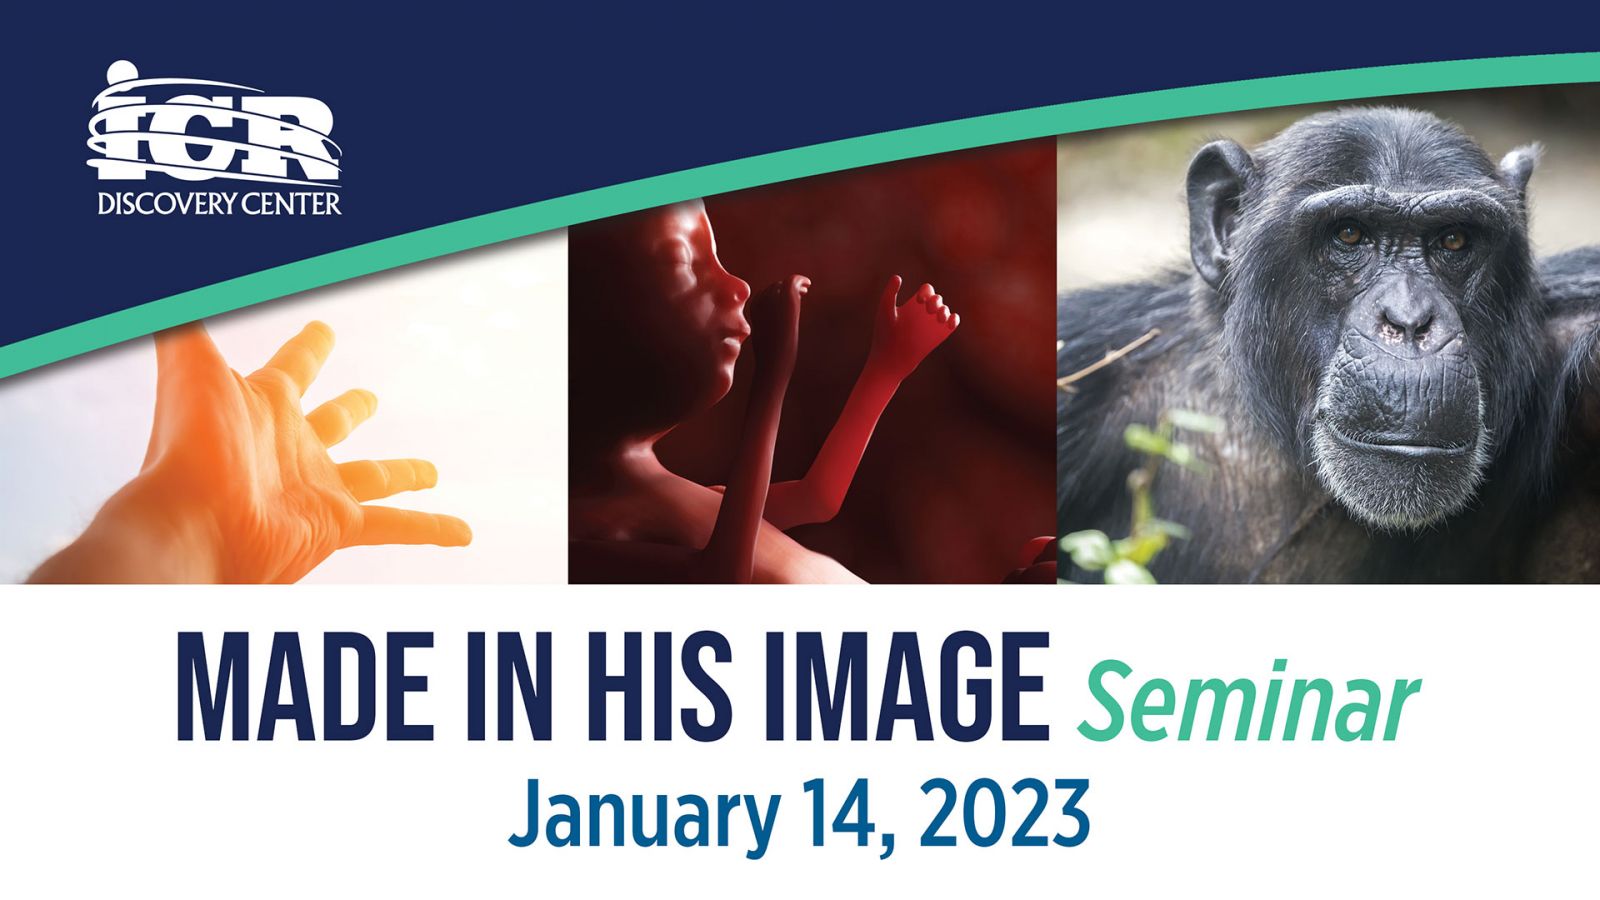 Made in His Image Seminar - January 14, 2023